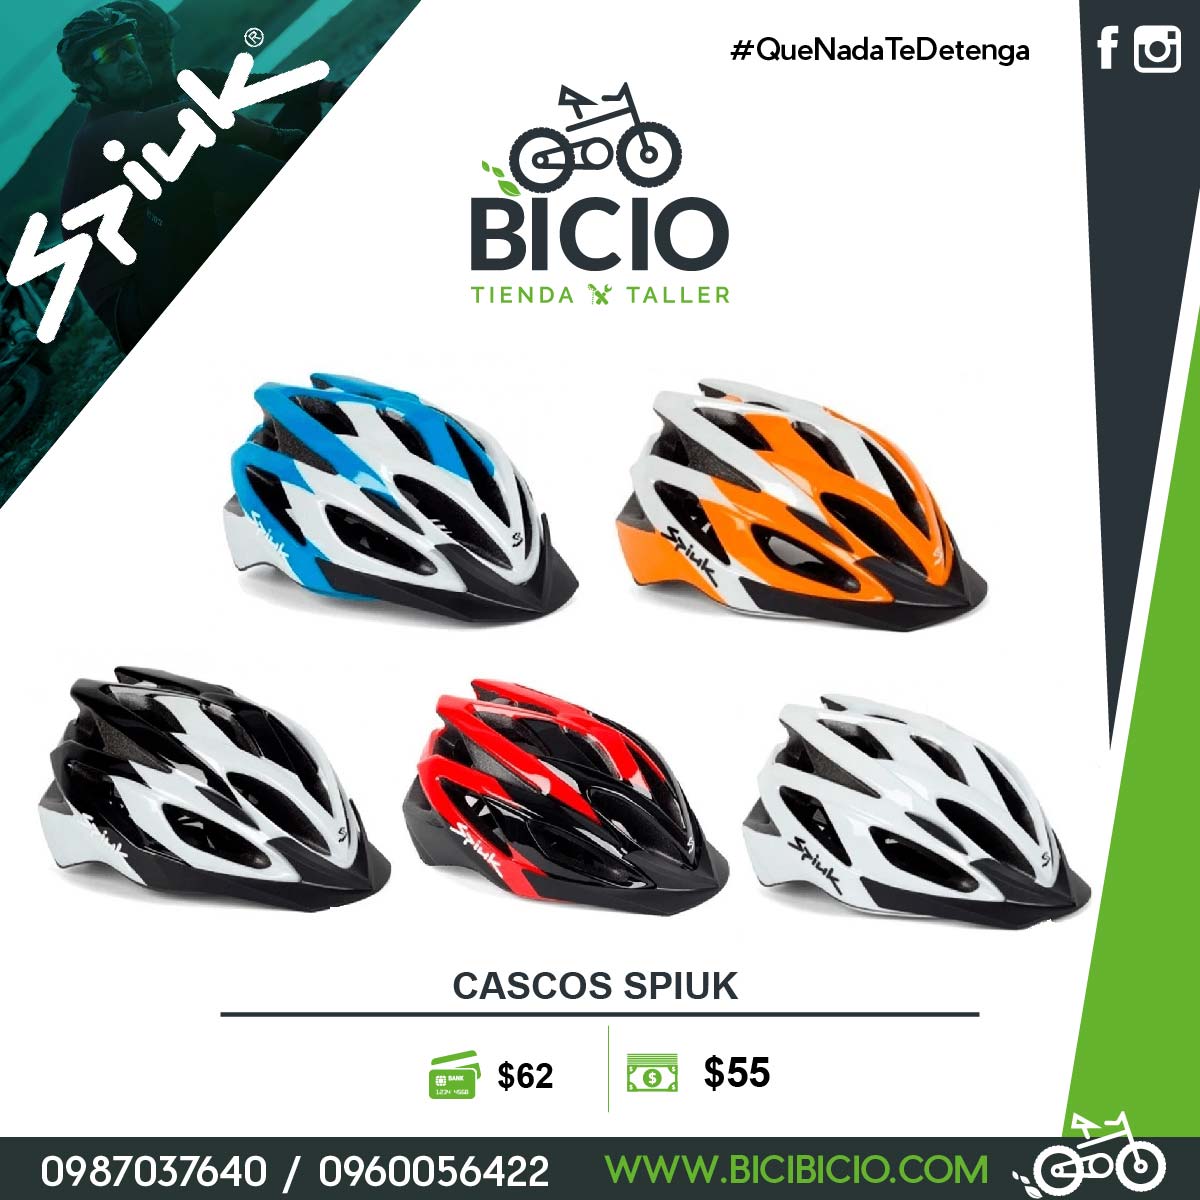 Casco Spiuk - Bicio tienda - taller de bicicletas